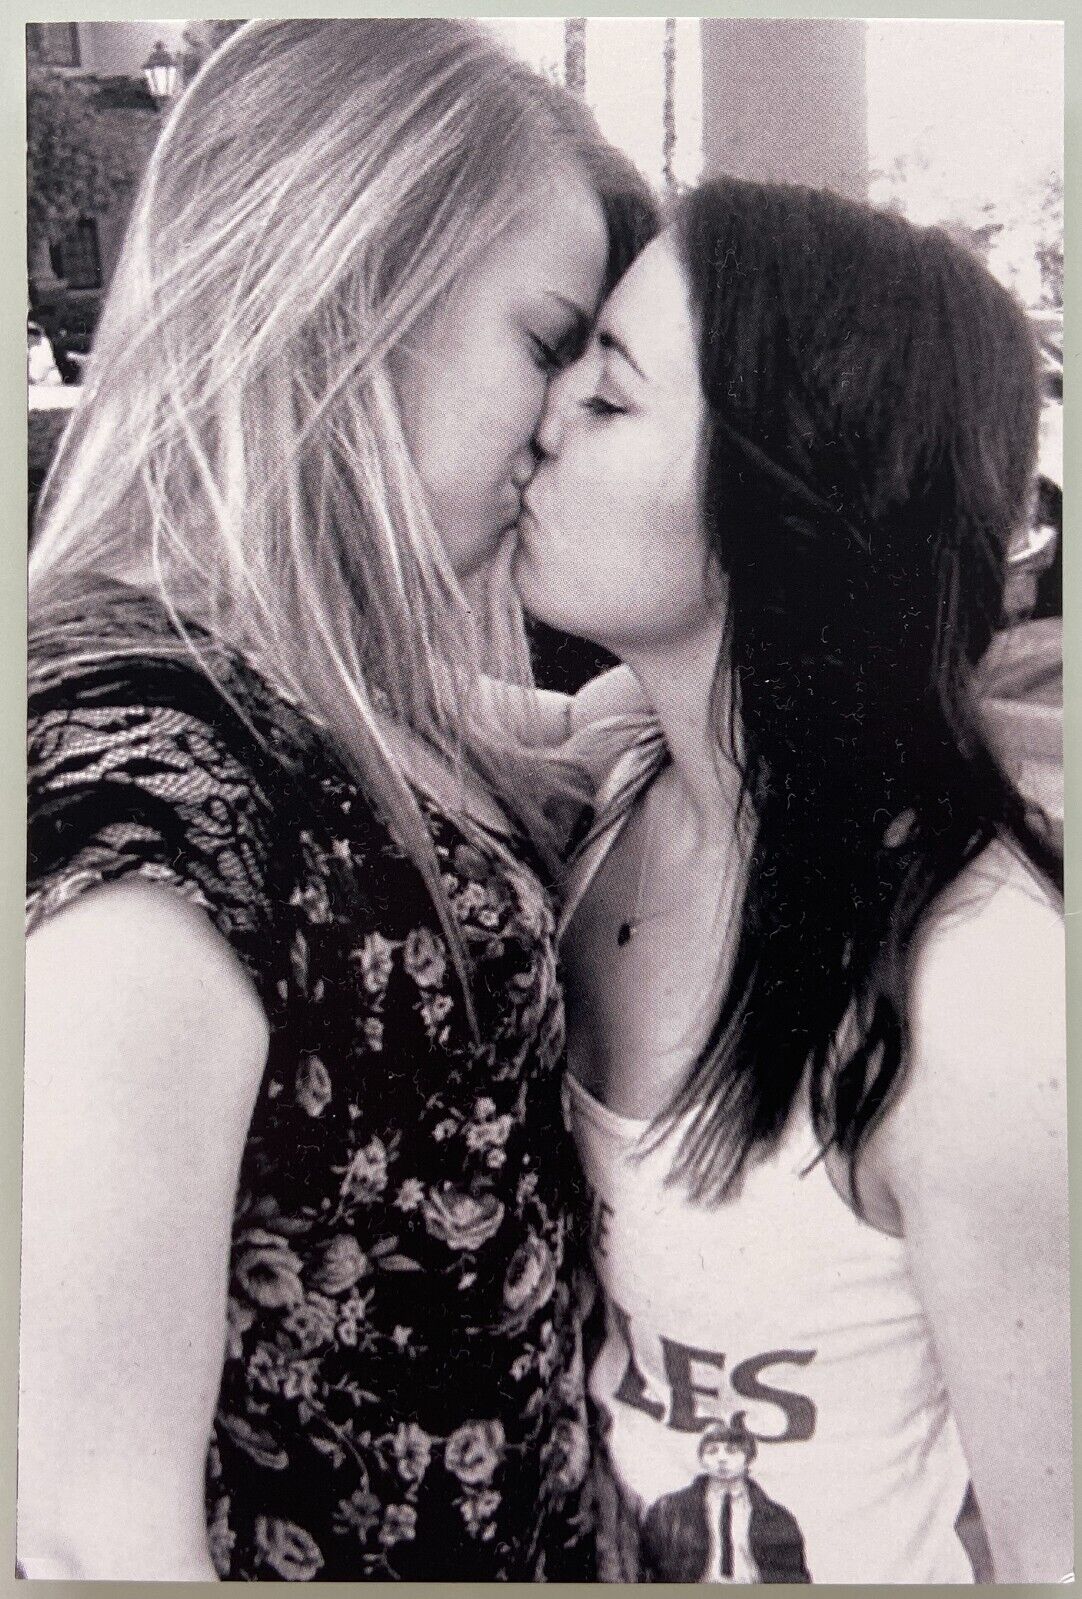 Lesbian KISS Affectionate Couple Women Kissing Gay Interest REPRINT Photo